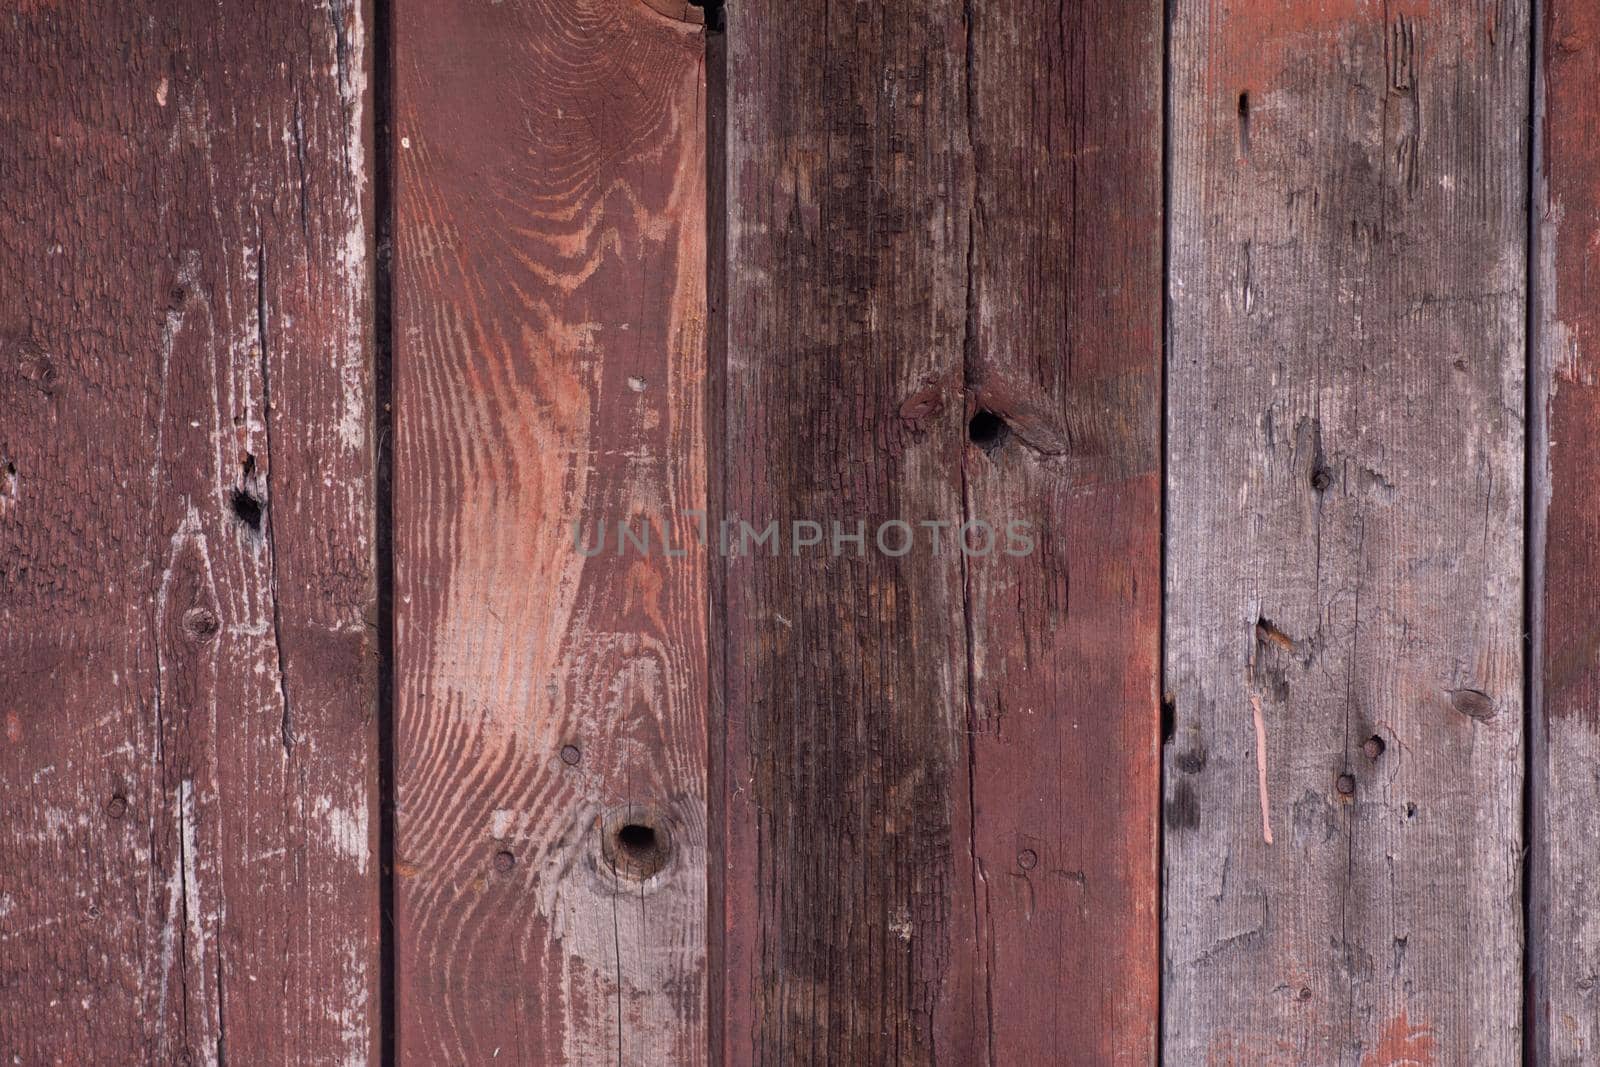 old wooden planks background. vintage wood texture.